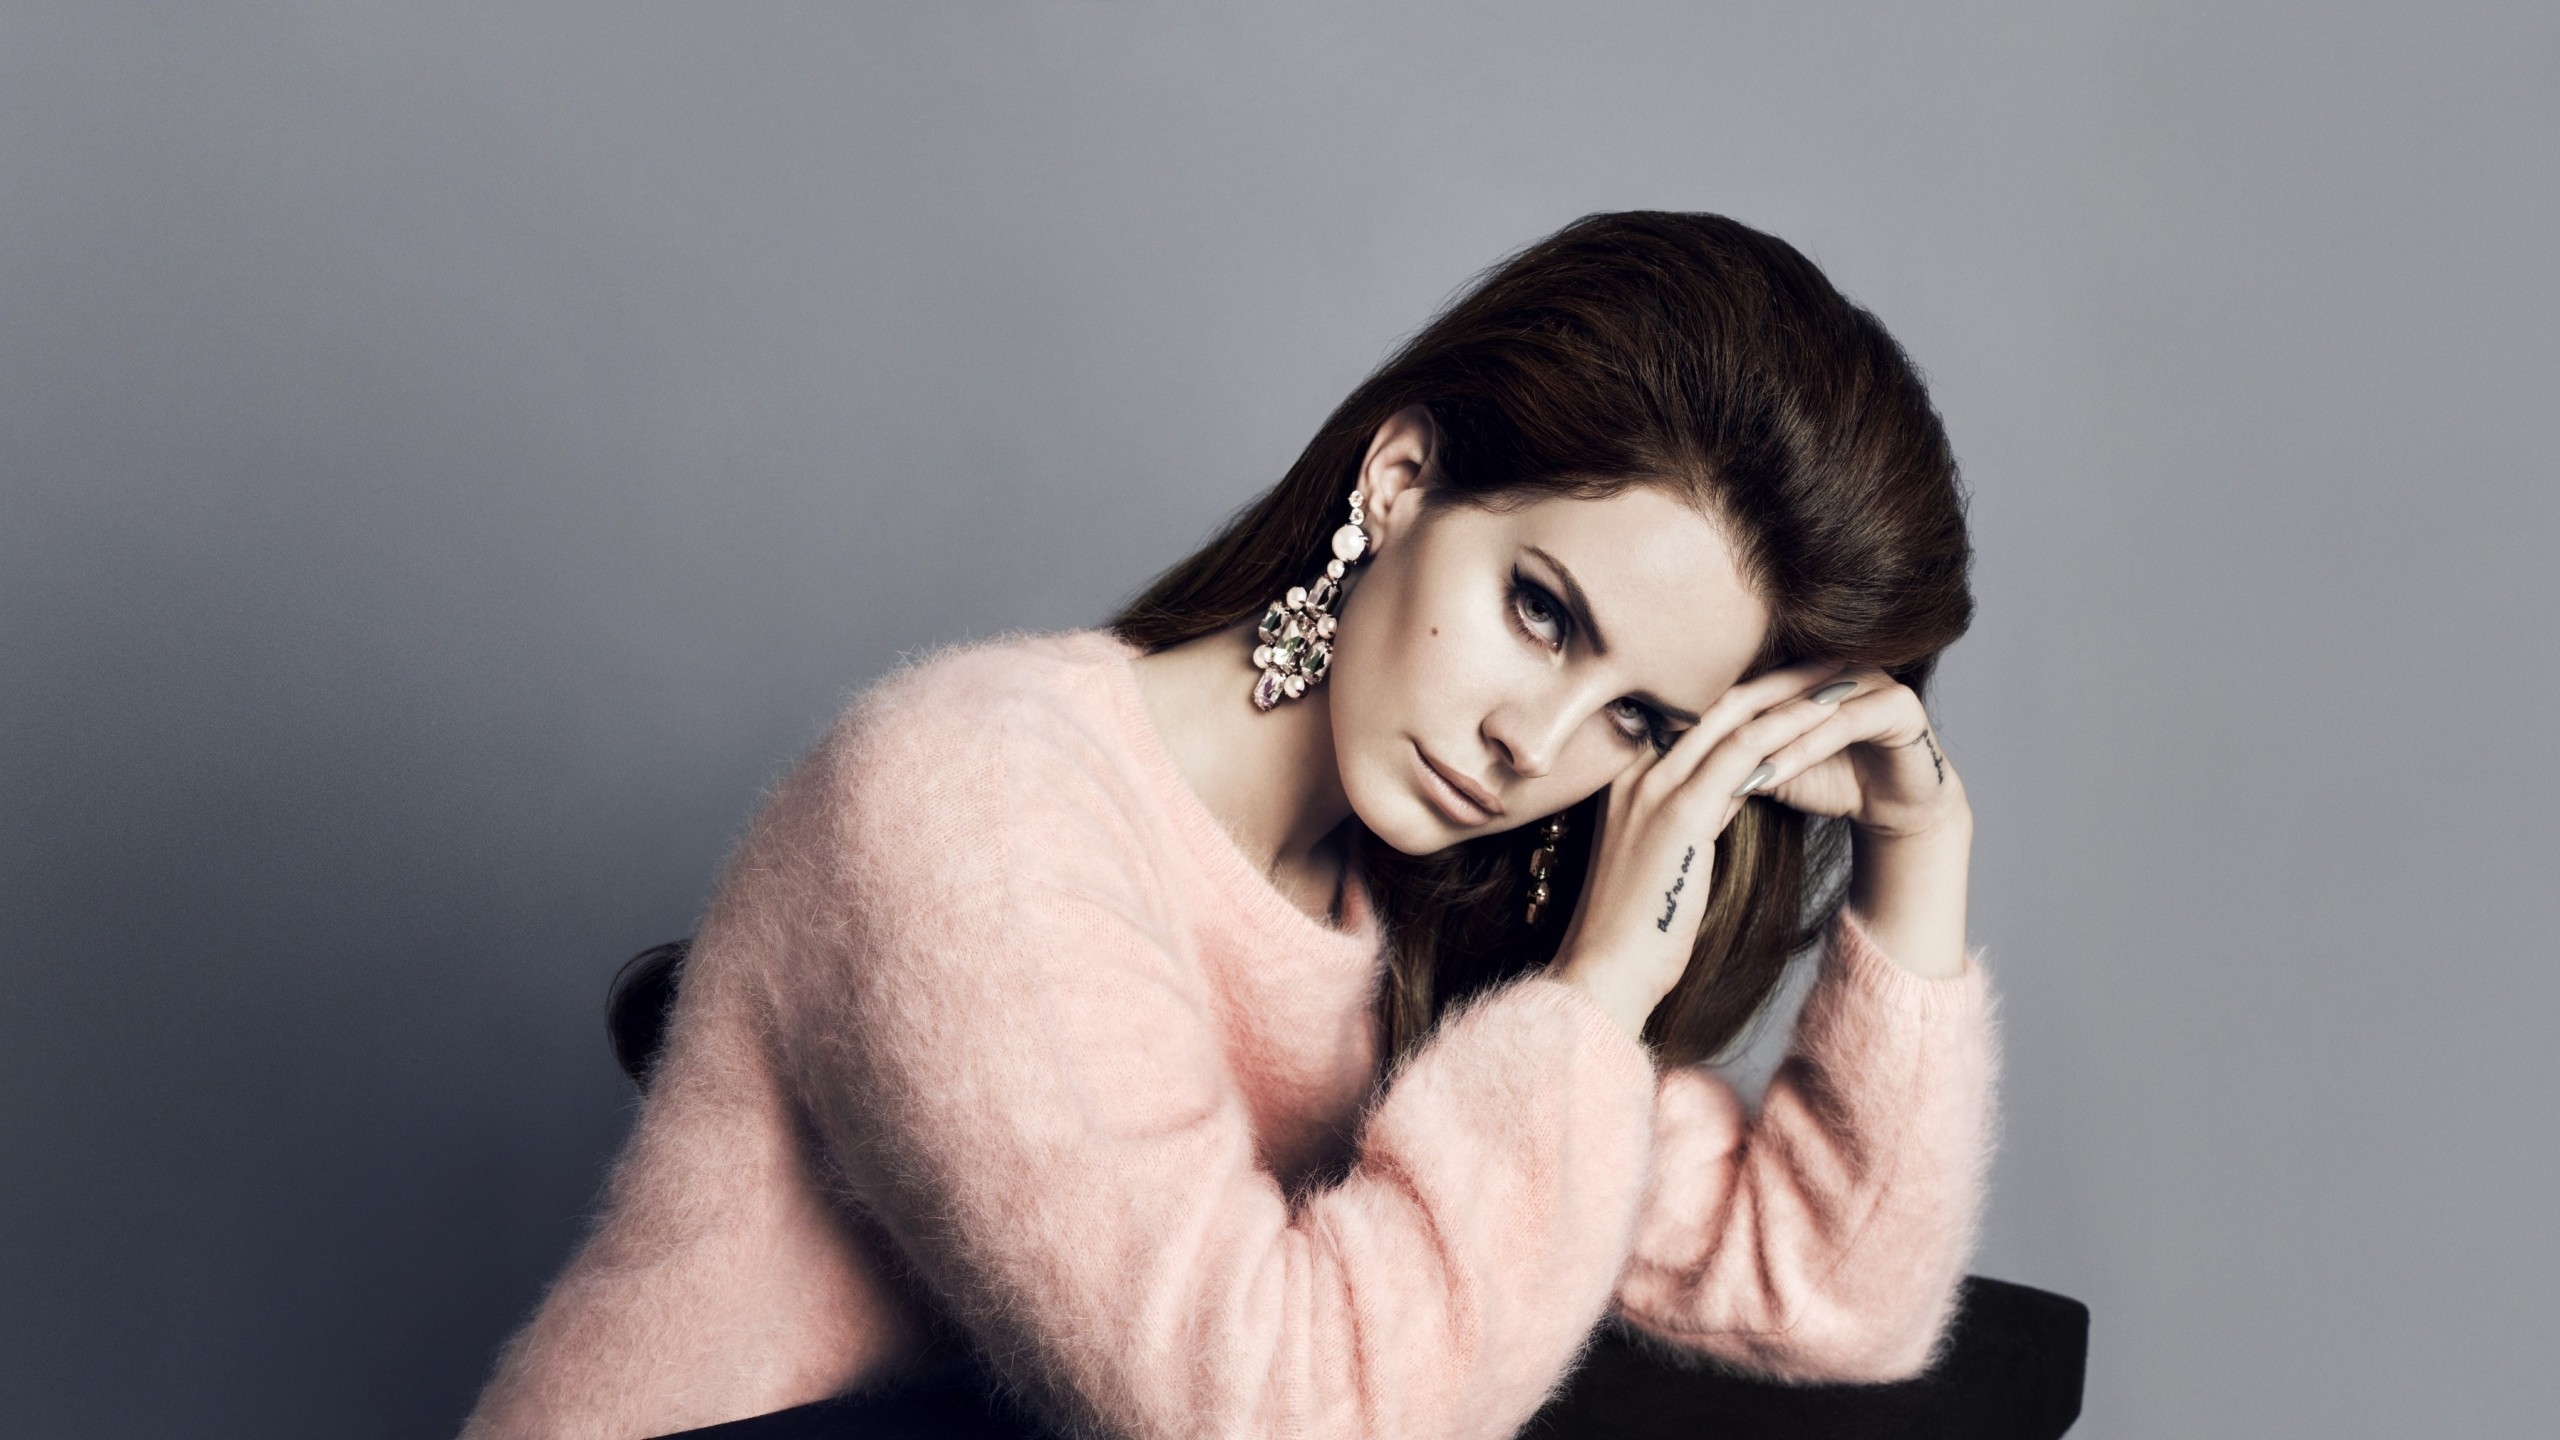 Beautiful Lana Del Rey for 2560x1440 HDTV resolution